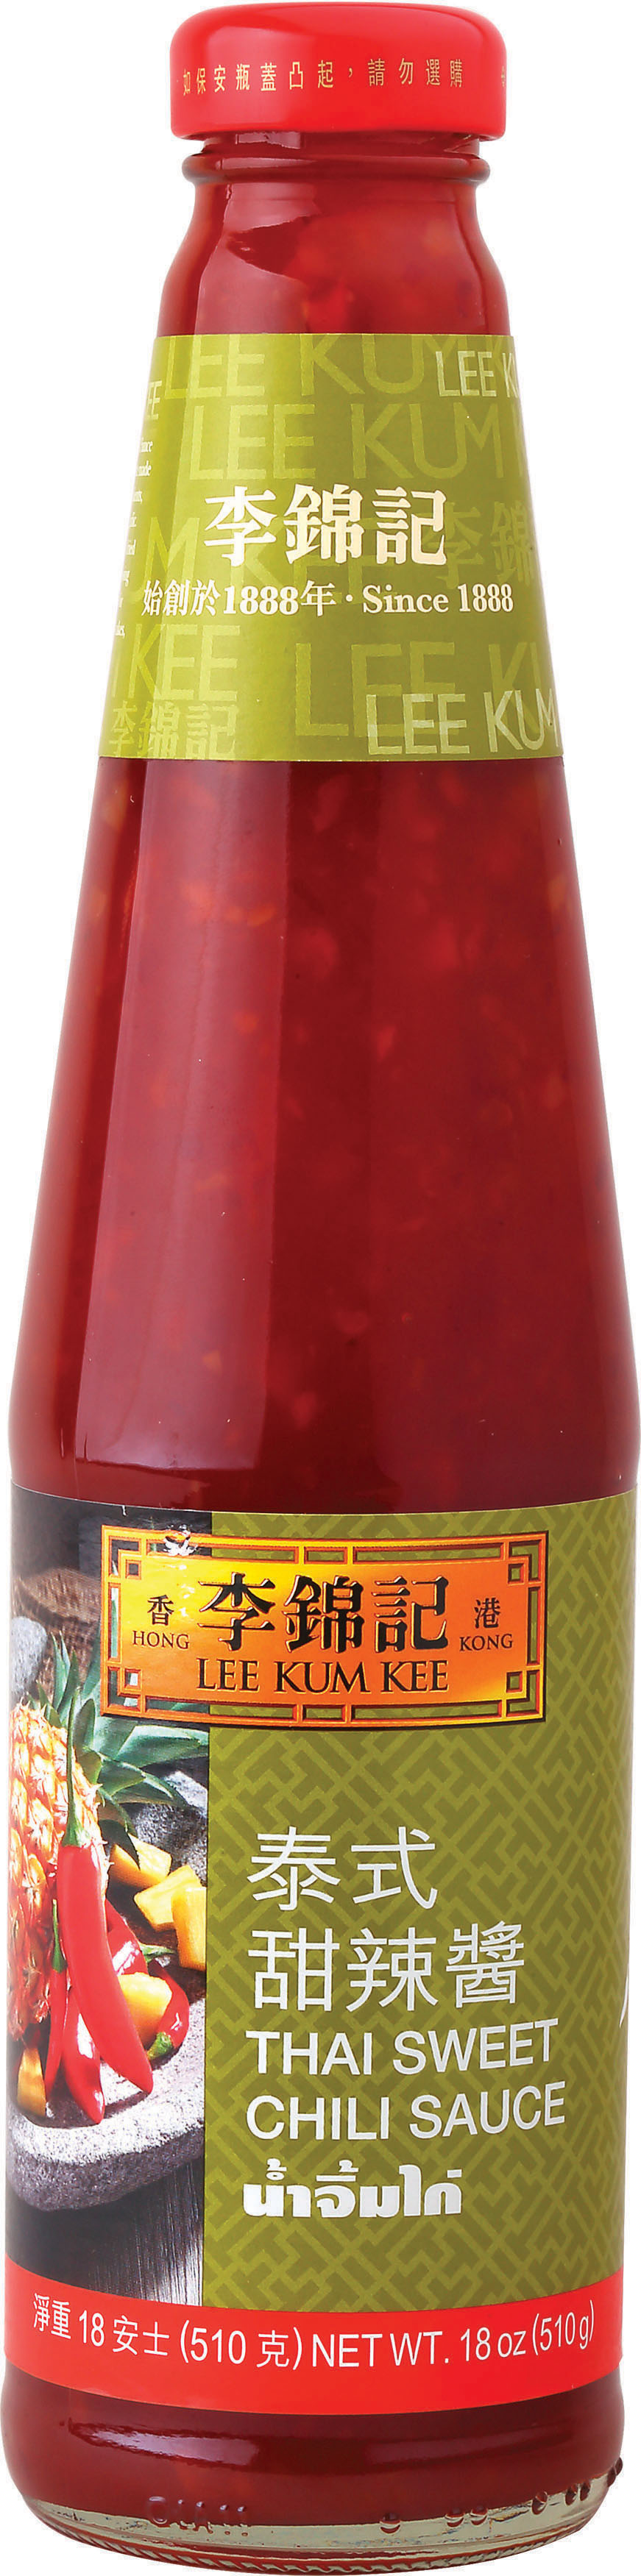 Thai Sweet Chili Sauce, 18oz, Bottle